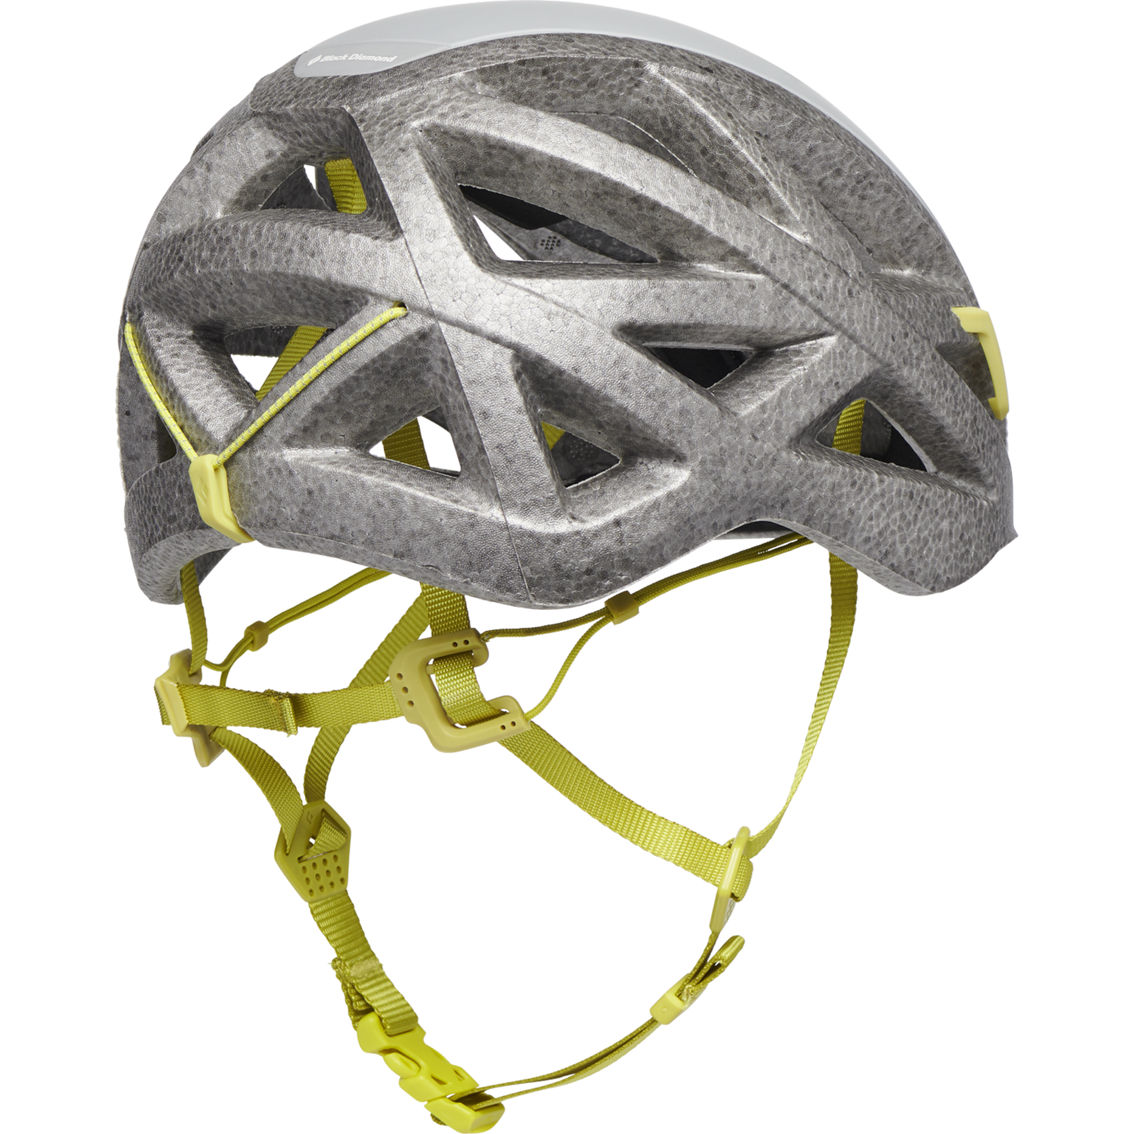 Black Diamond Equipment Vapor Helmet - Image 2 of 7